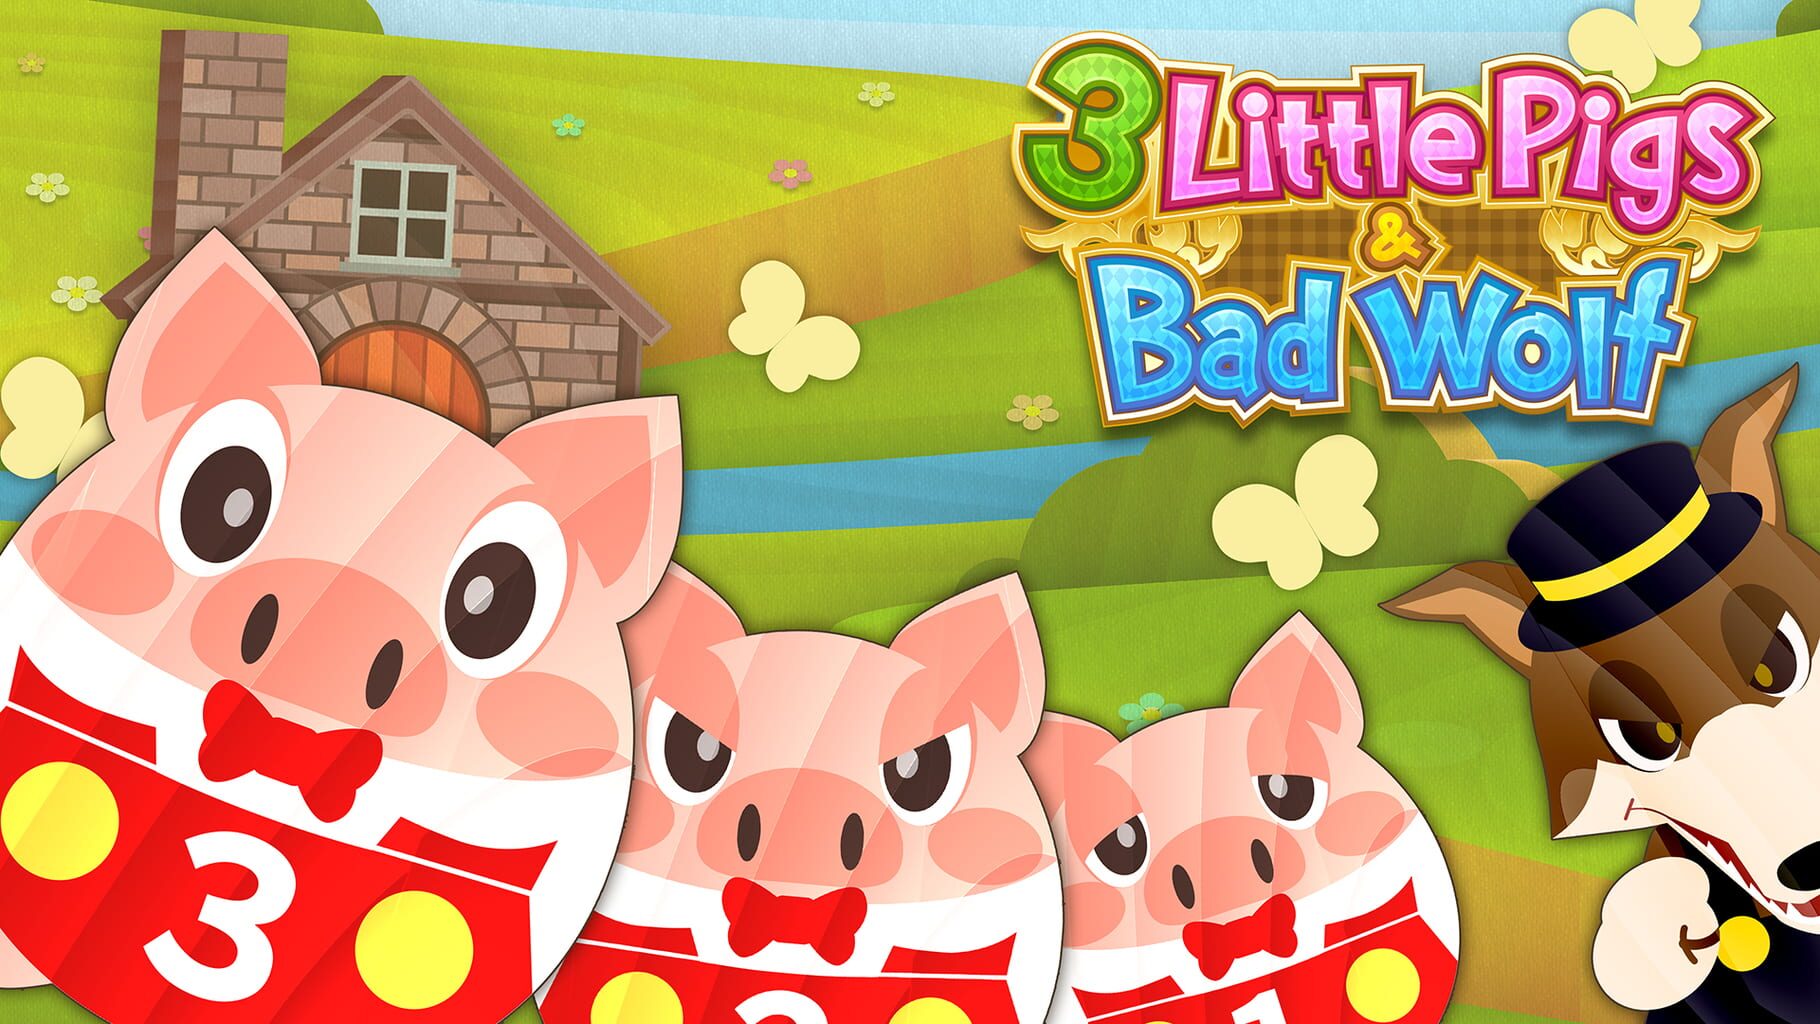 3 Little Pigs & Bad Wolf artwork